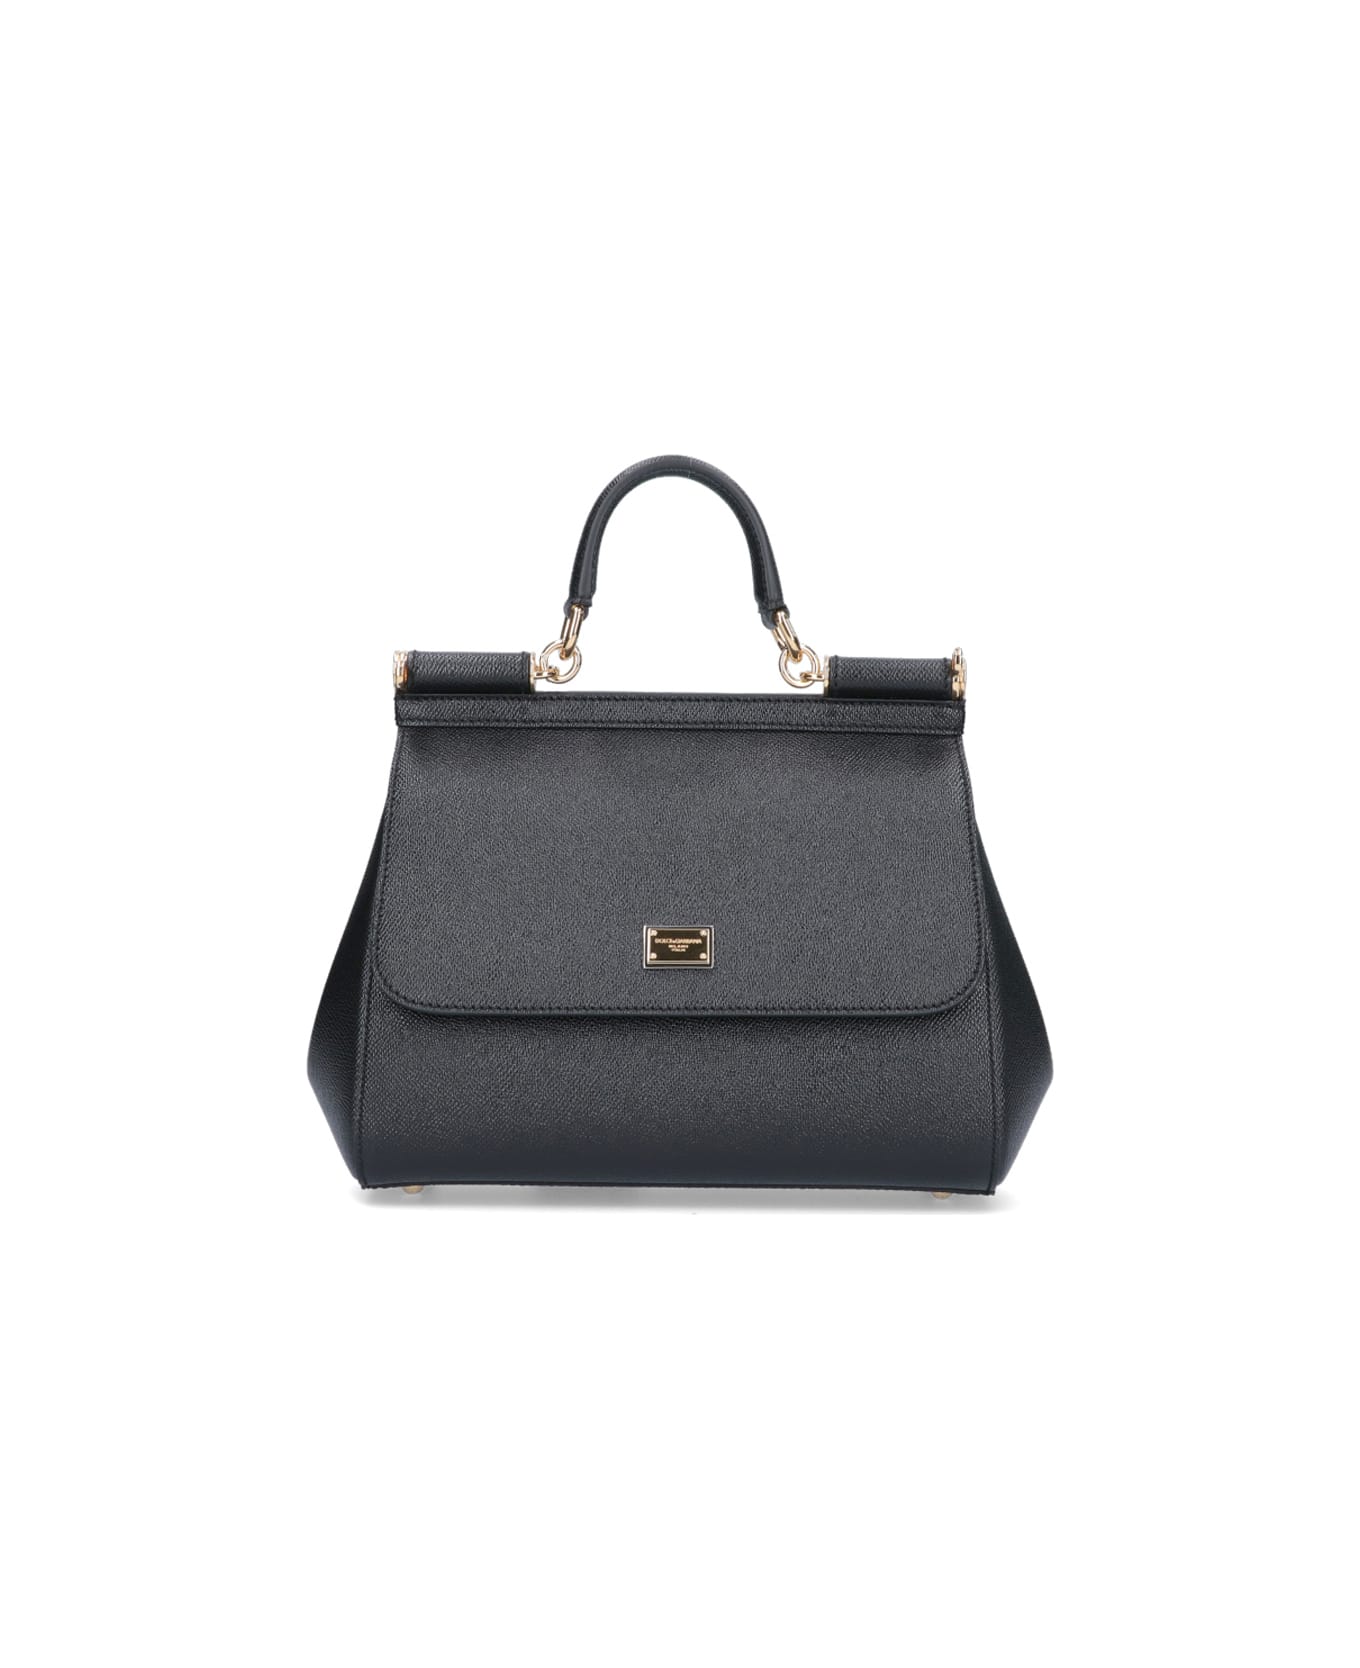 Dolce & Gabbana - Medium Sicily Bag - Black   トートバッグ